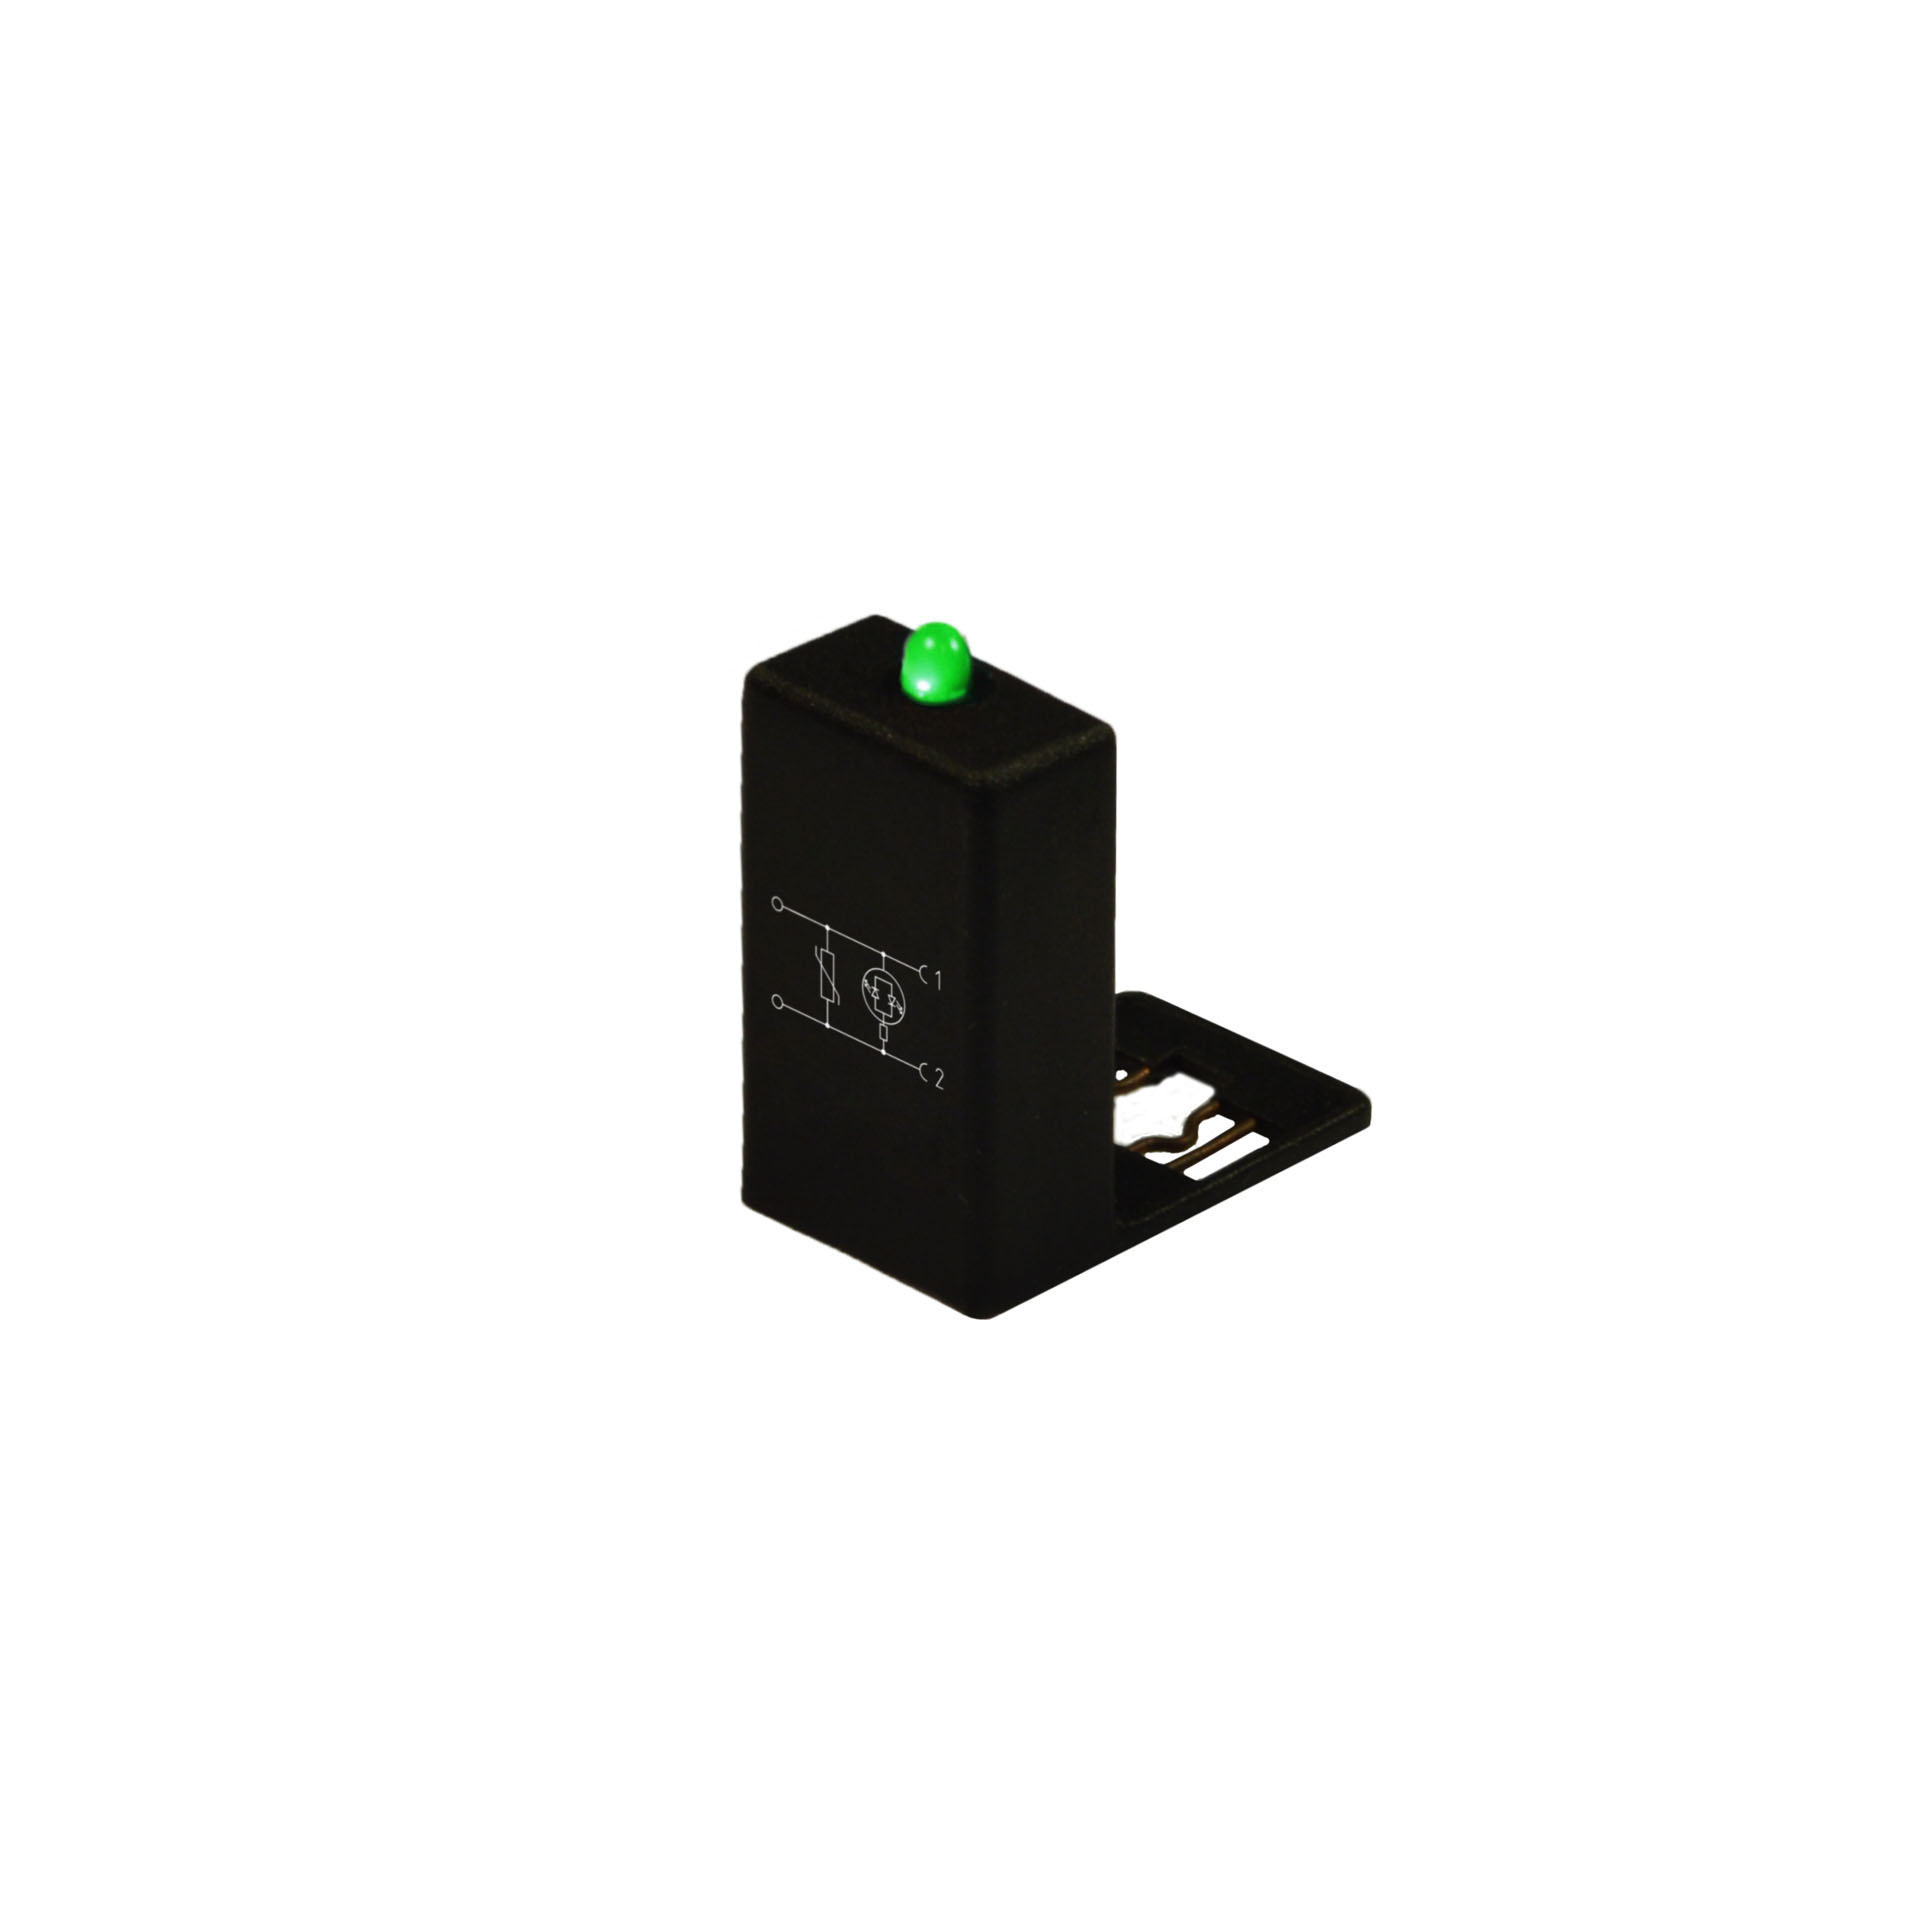 Adapter for DIN43650/C,9,4mm,2P+E,with GREEN LED + VARISTOR 115V